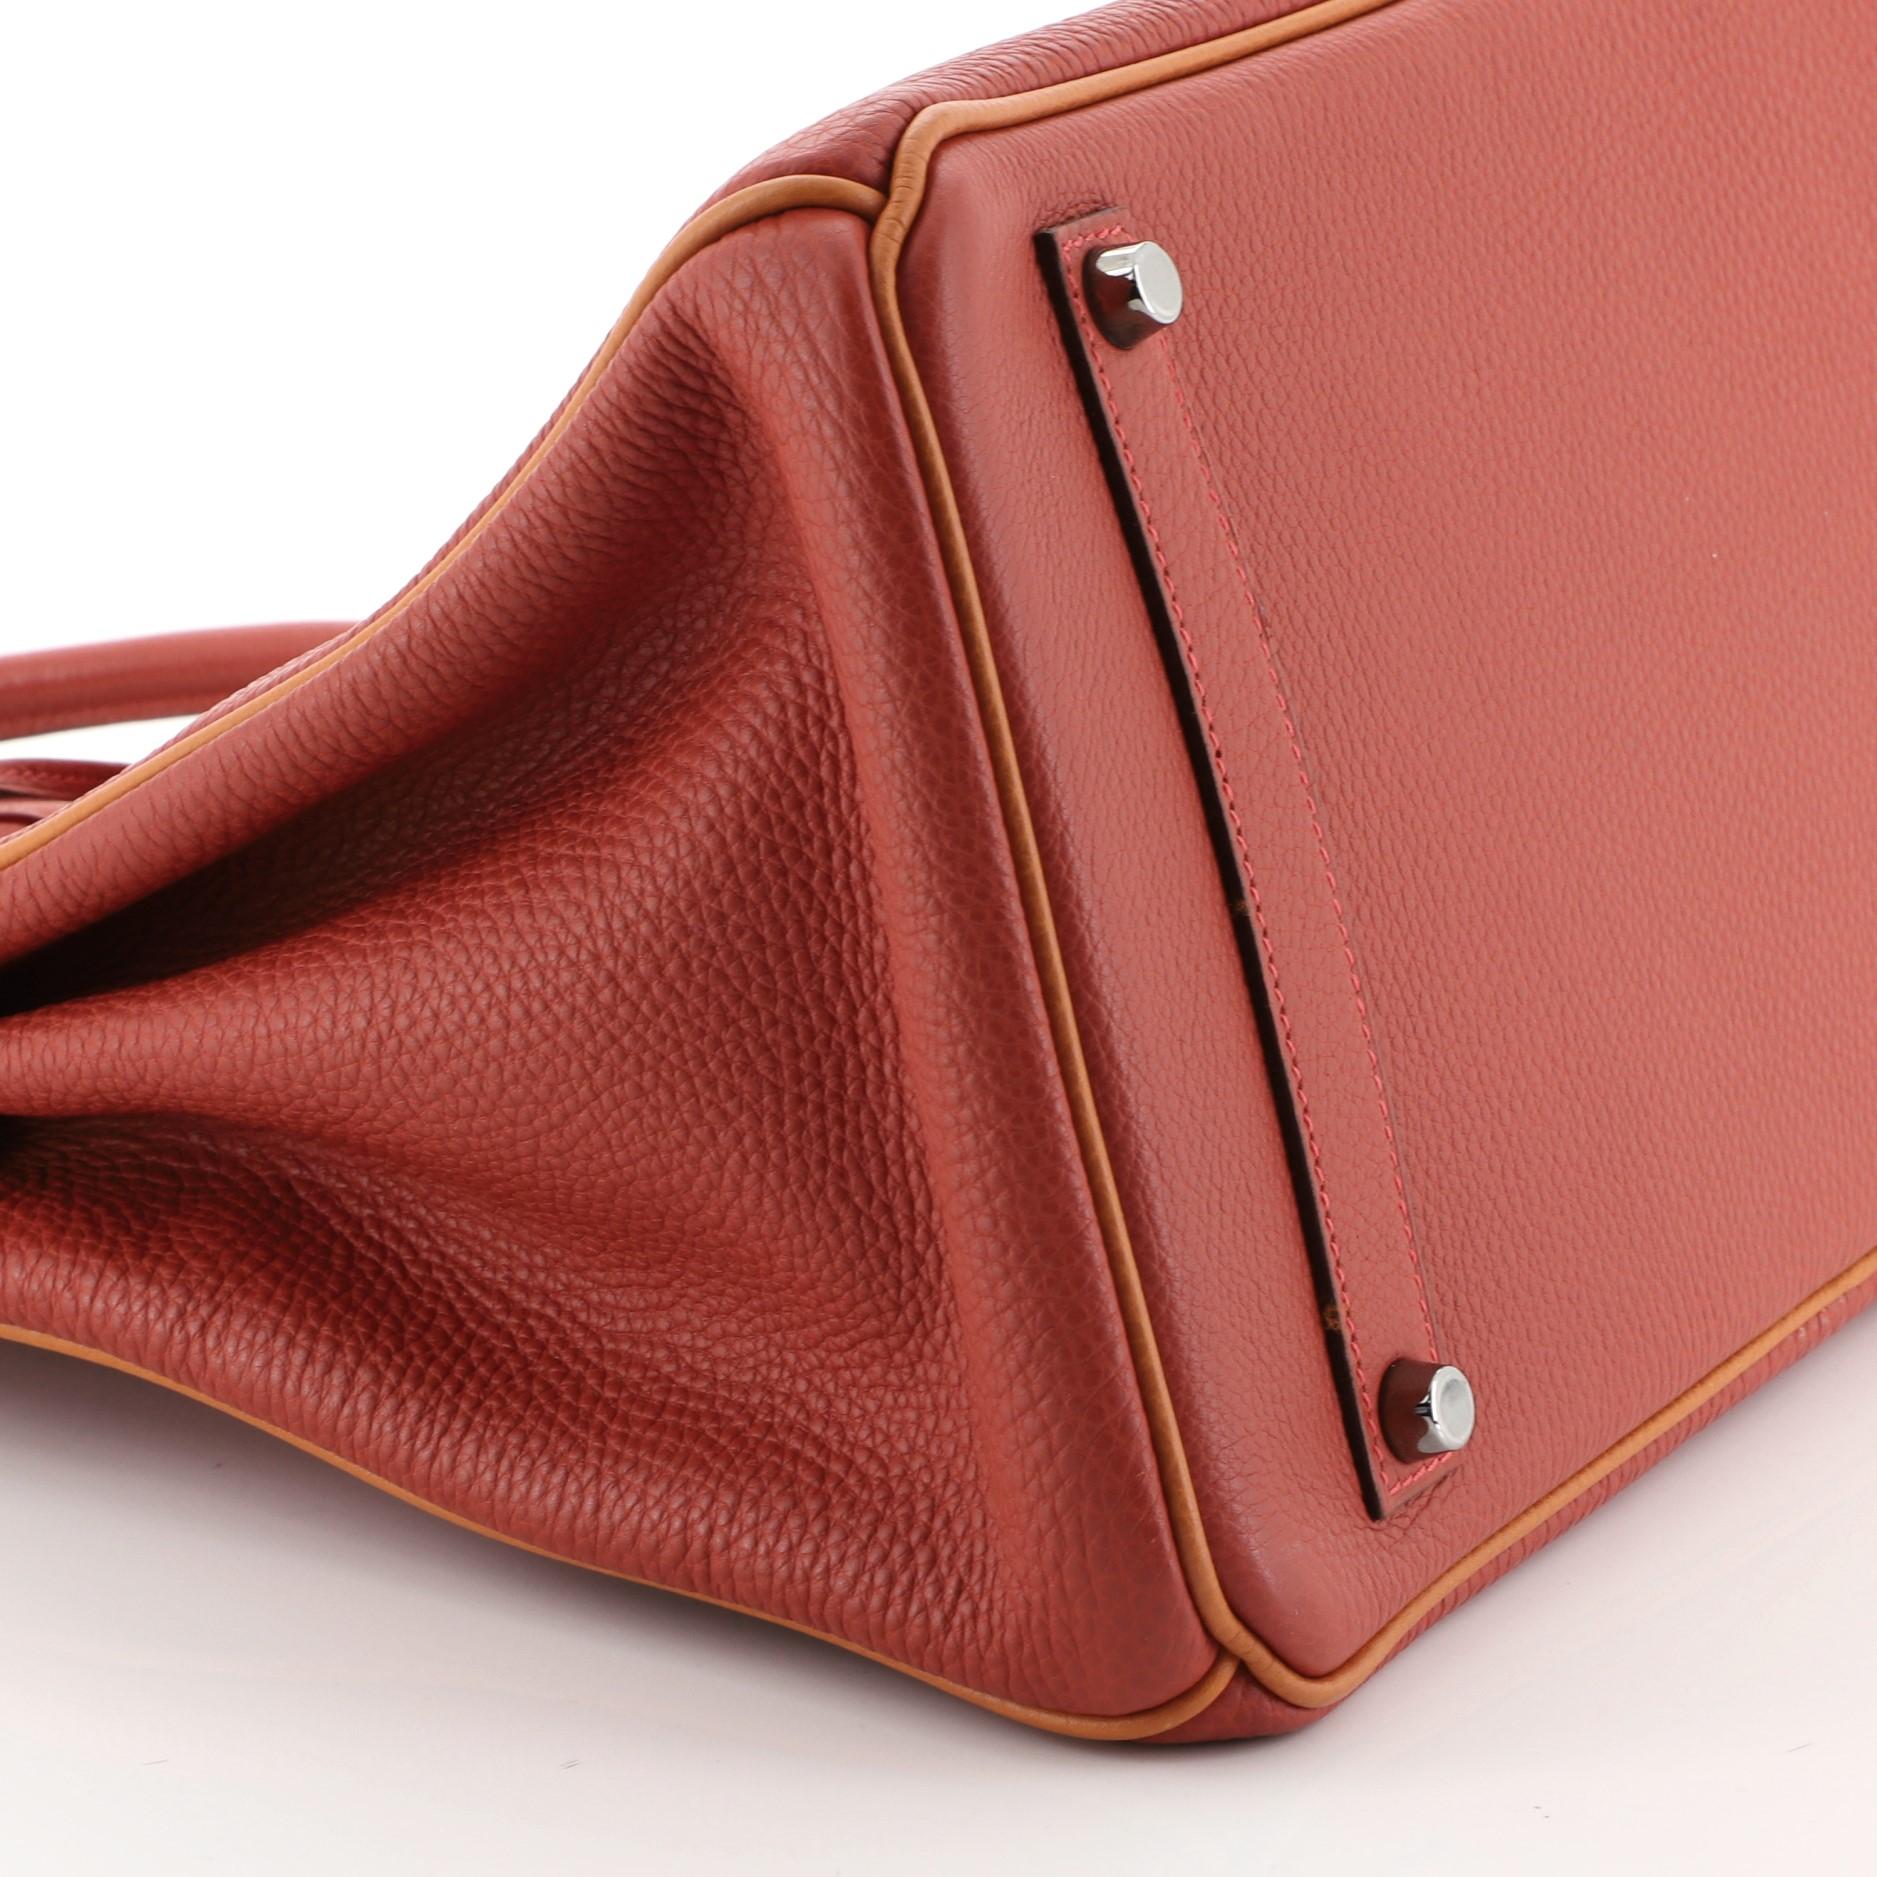 Hermes Birkin Handbag Bicolor Togo with Ruthenium Hardware 35 3